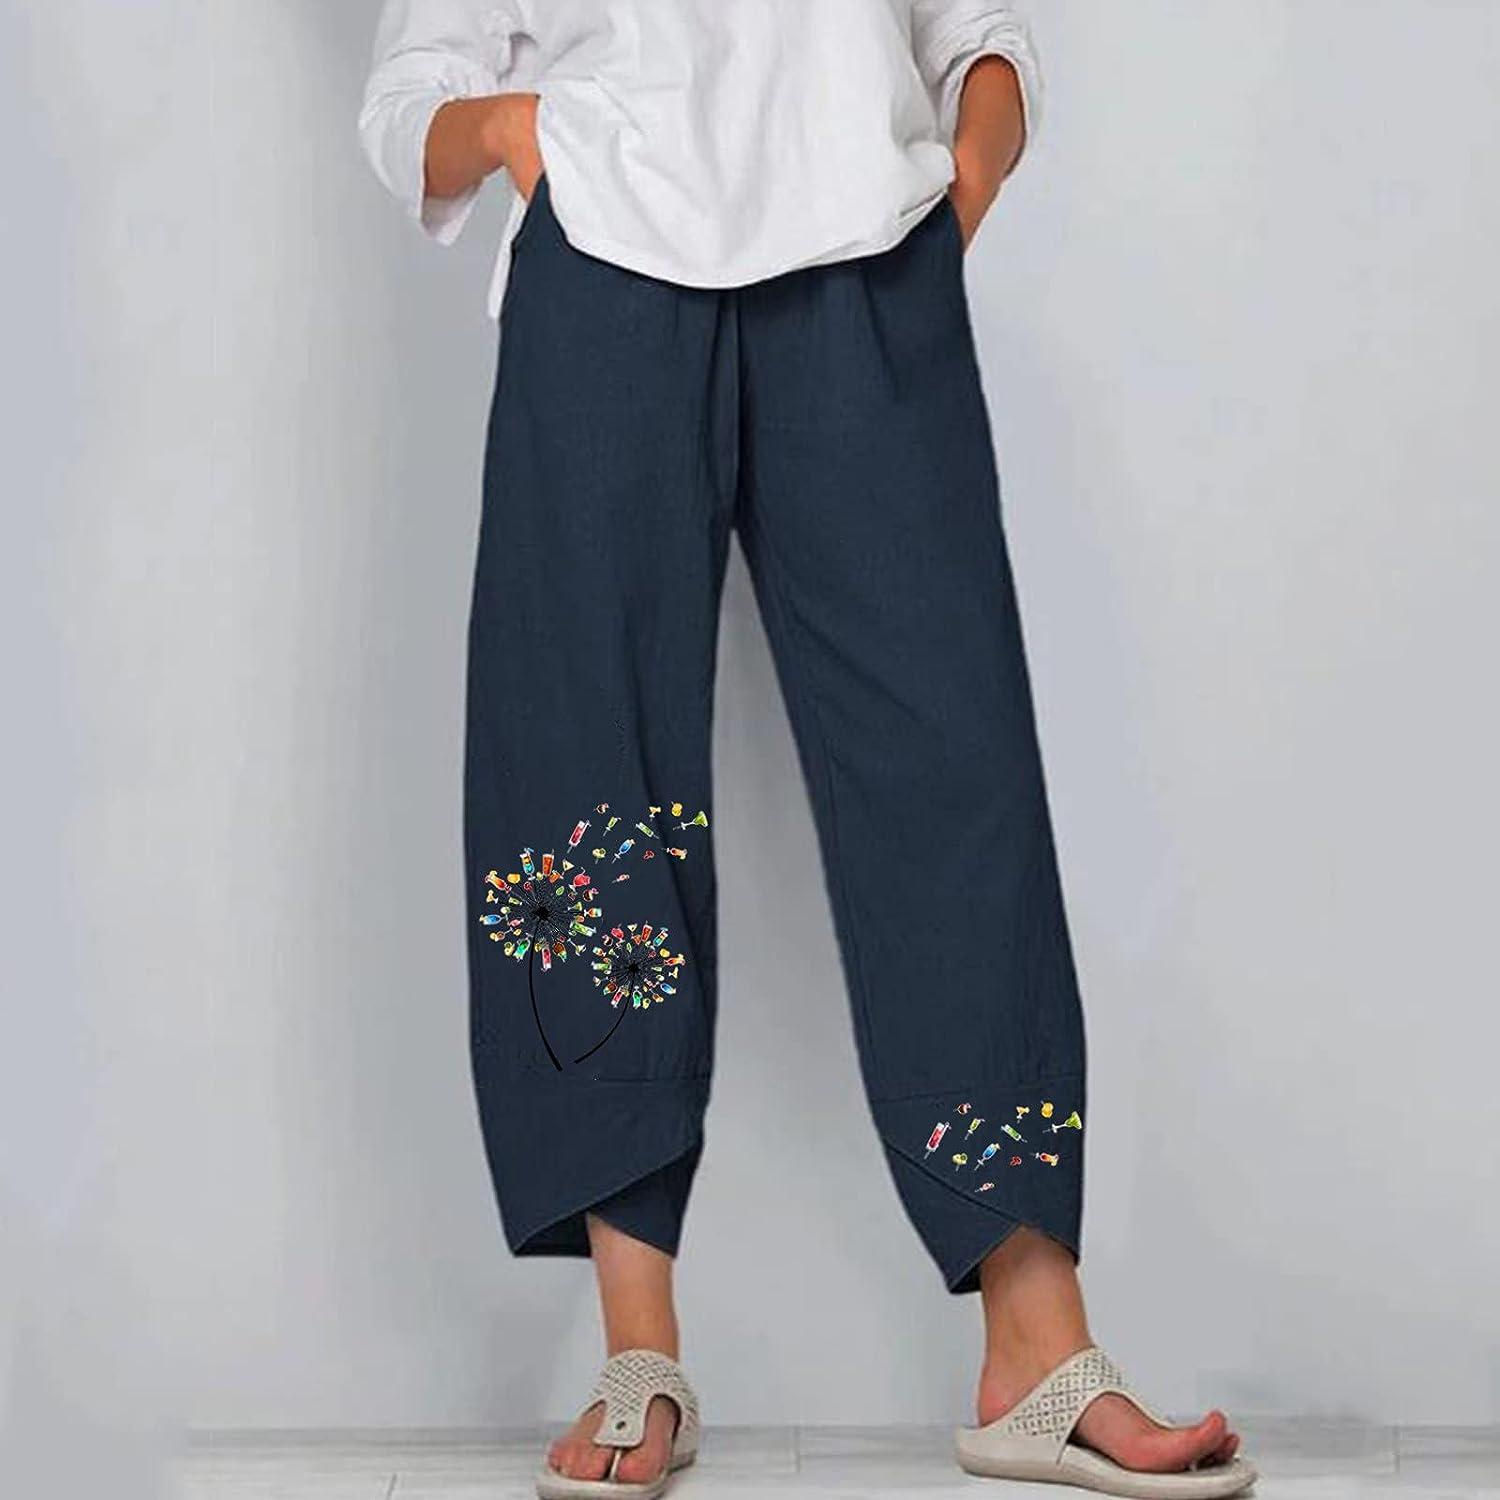 Women's Summer Cotton Casual Pants